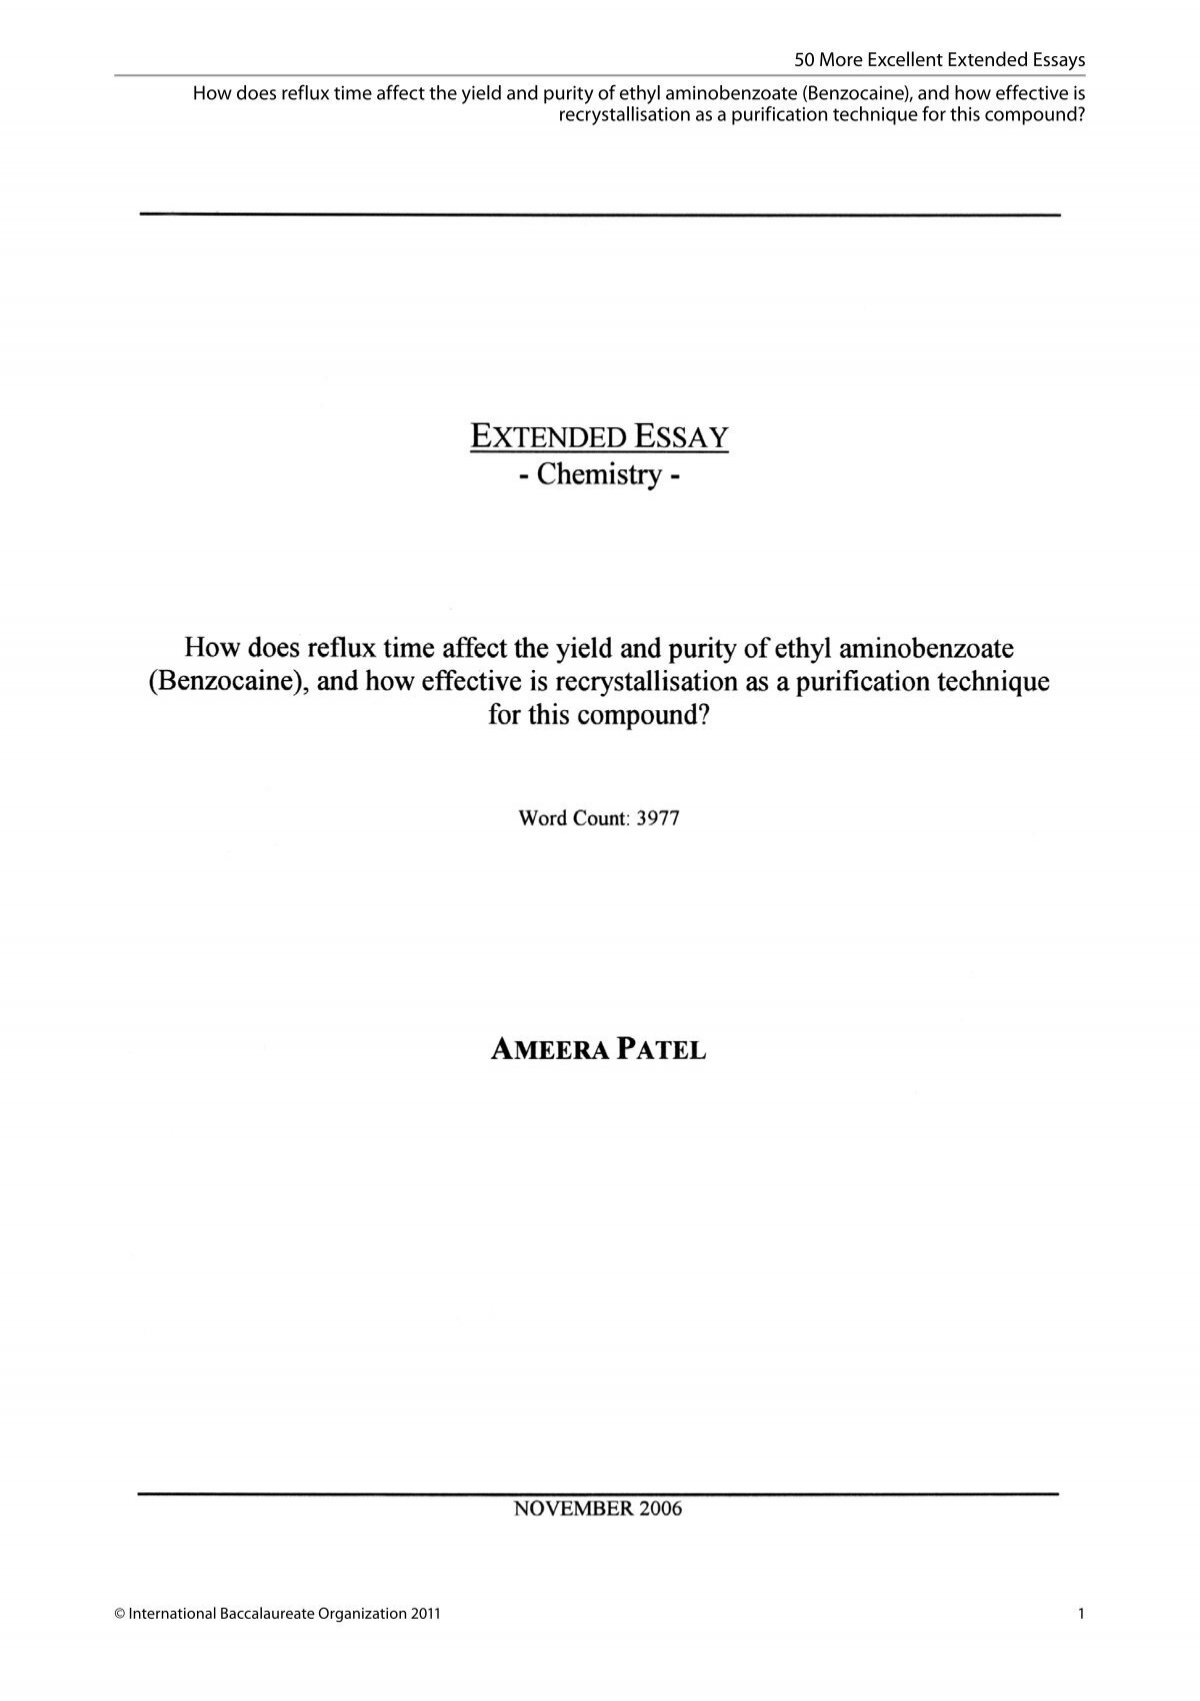 50 excellent extended essays pdf